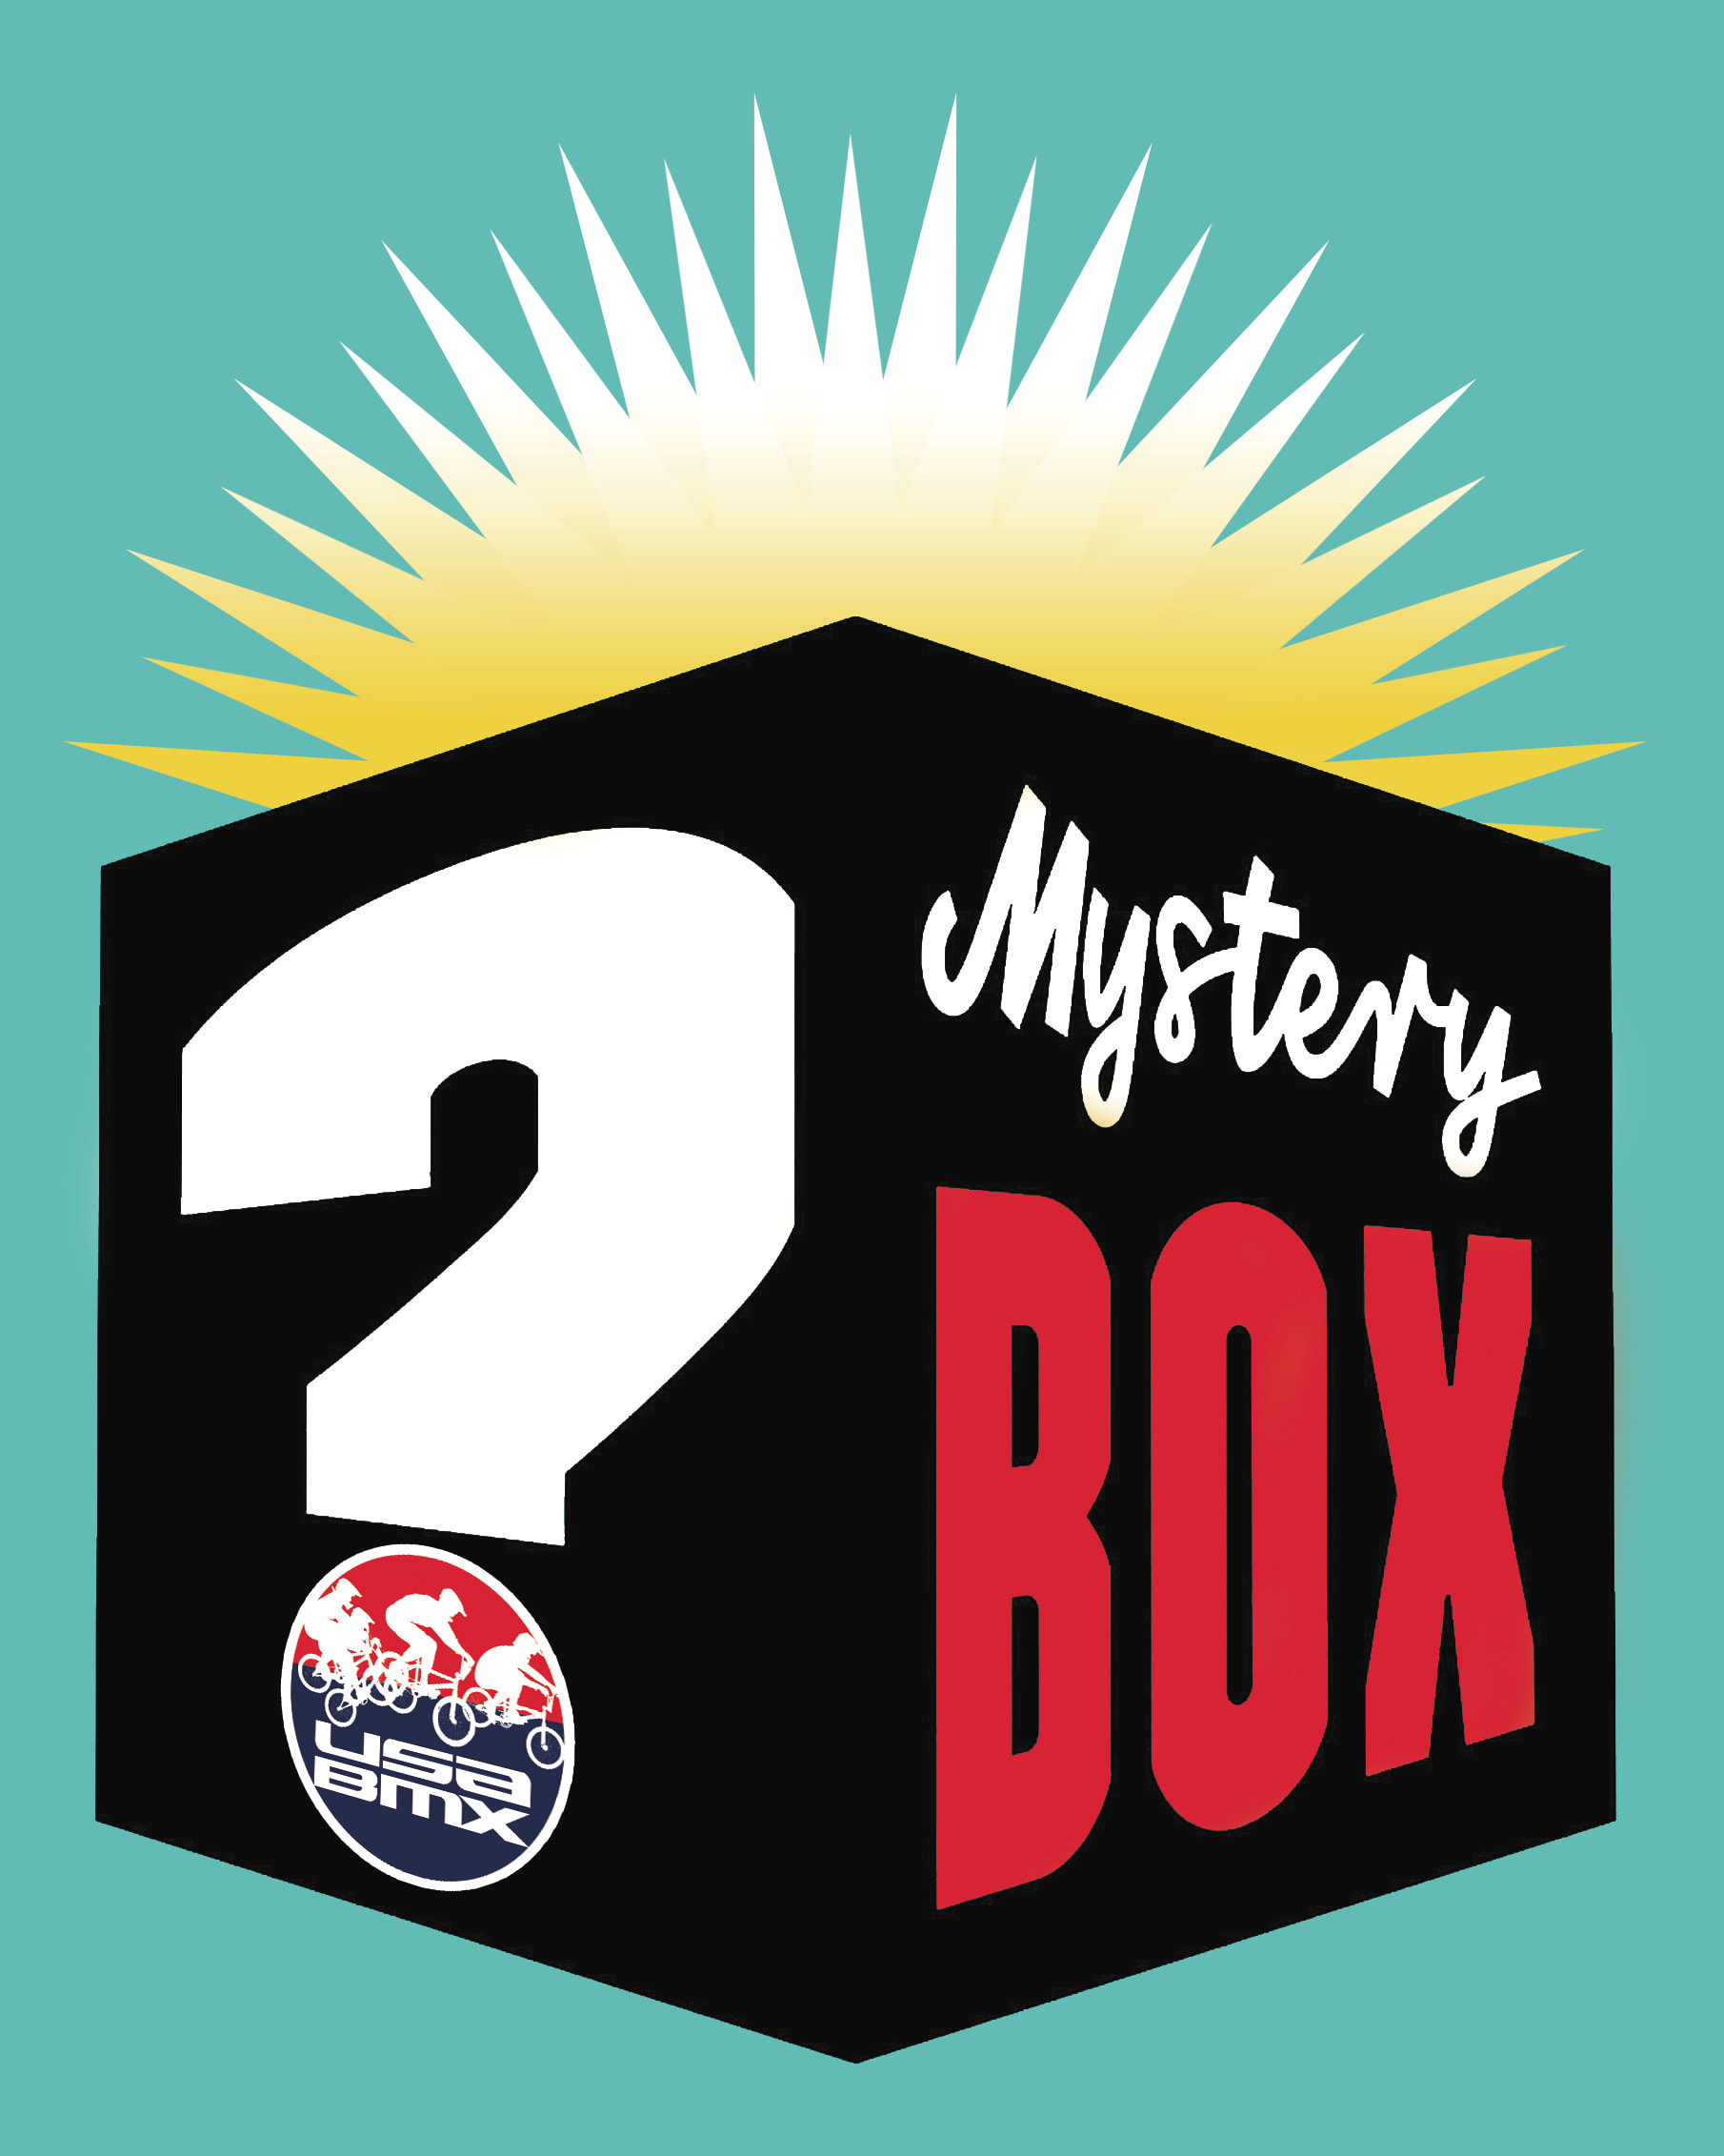 MYSTERY BOX (Large Size)